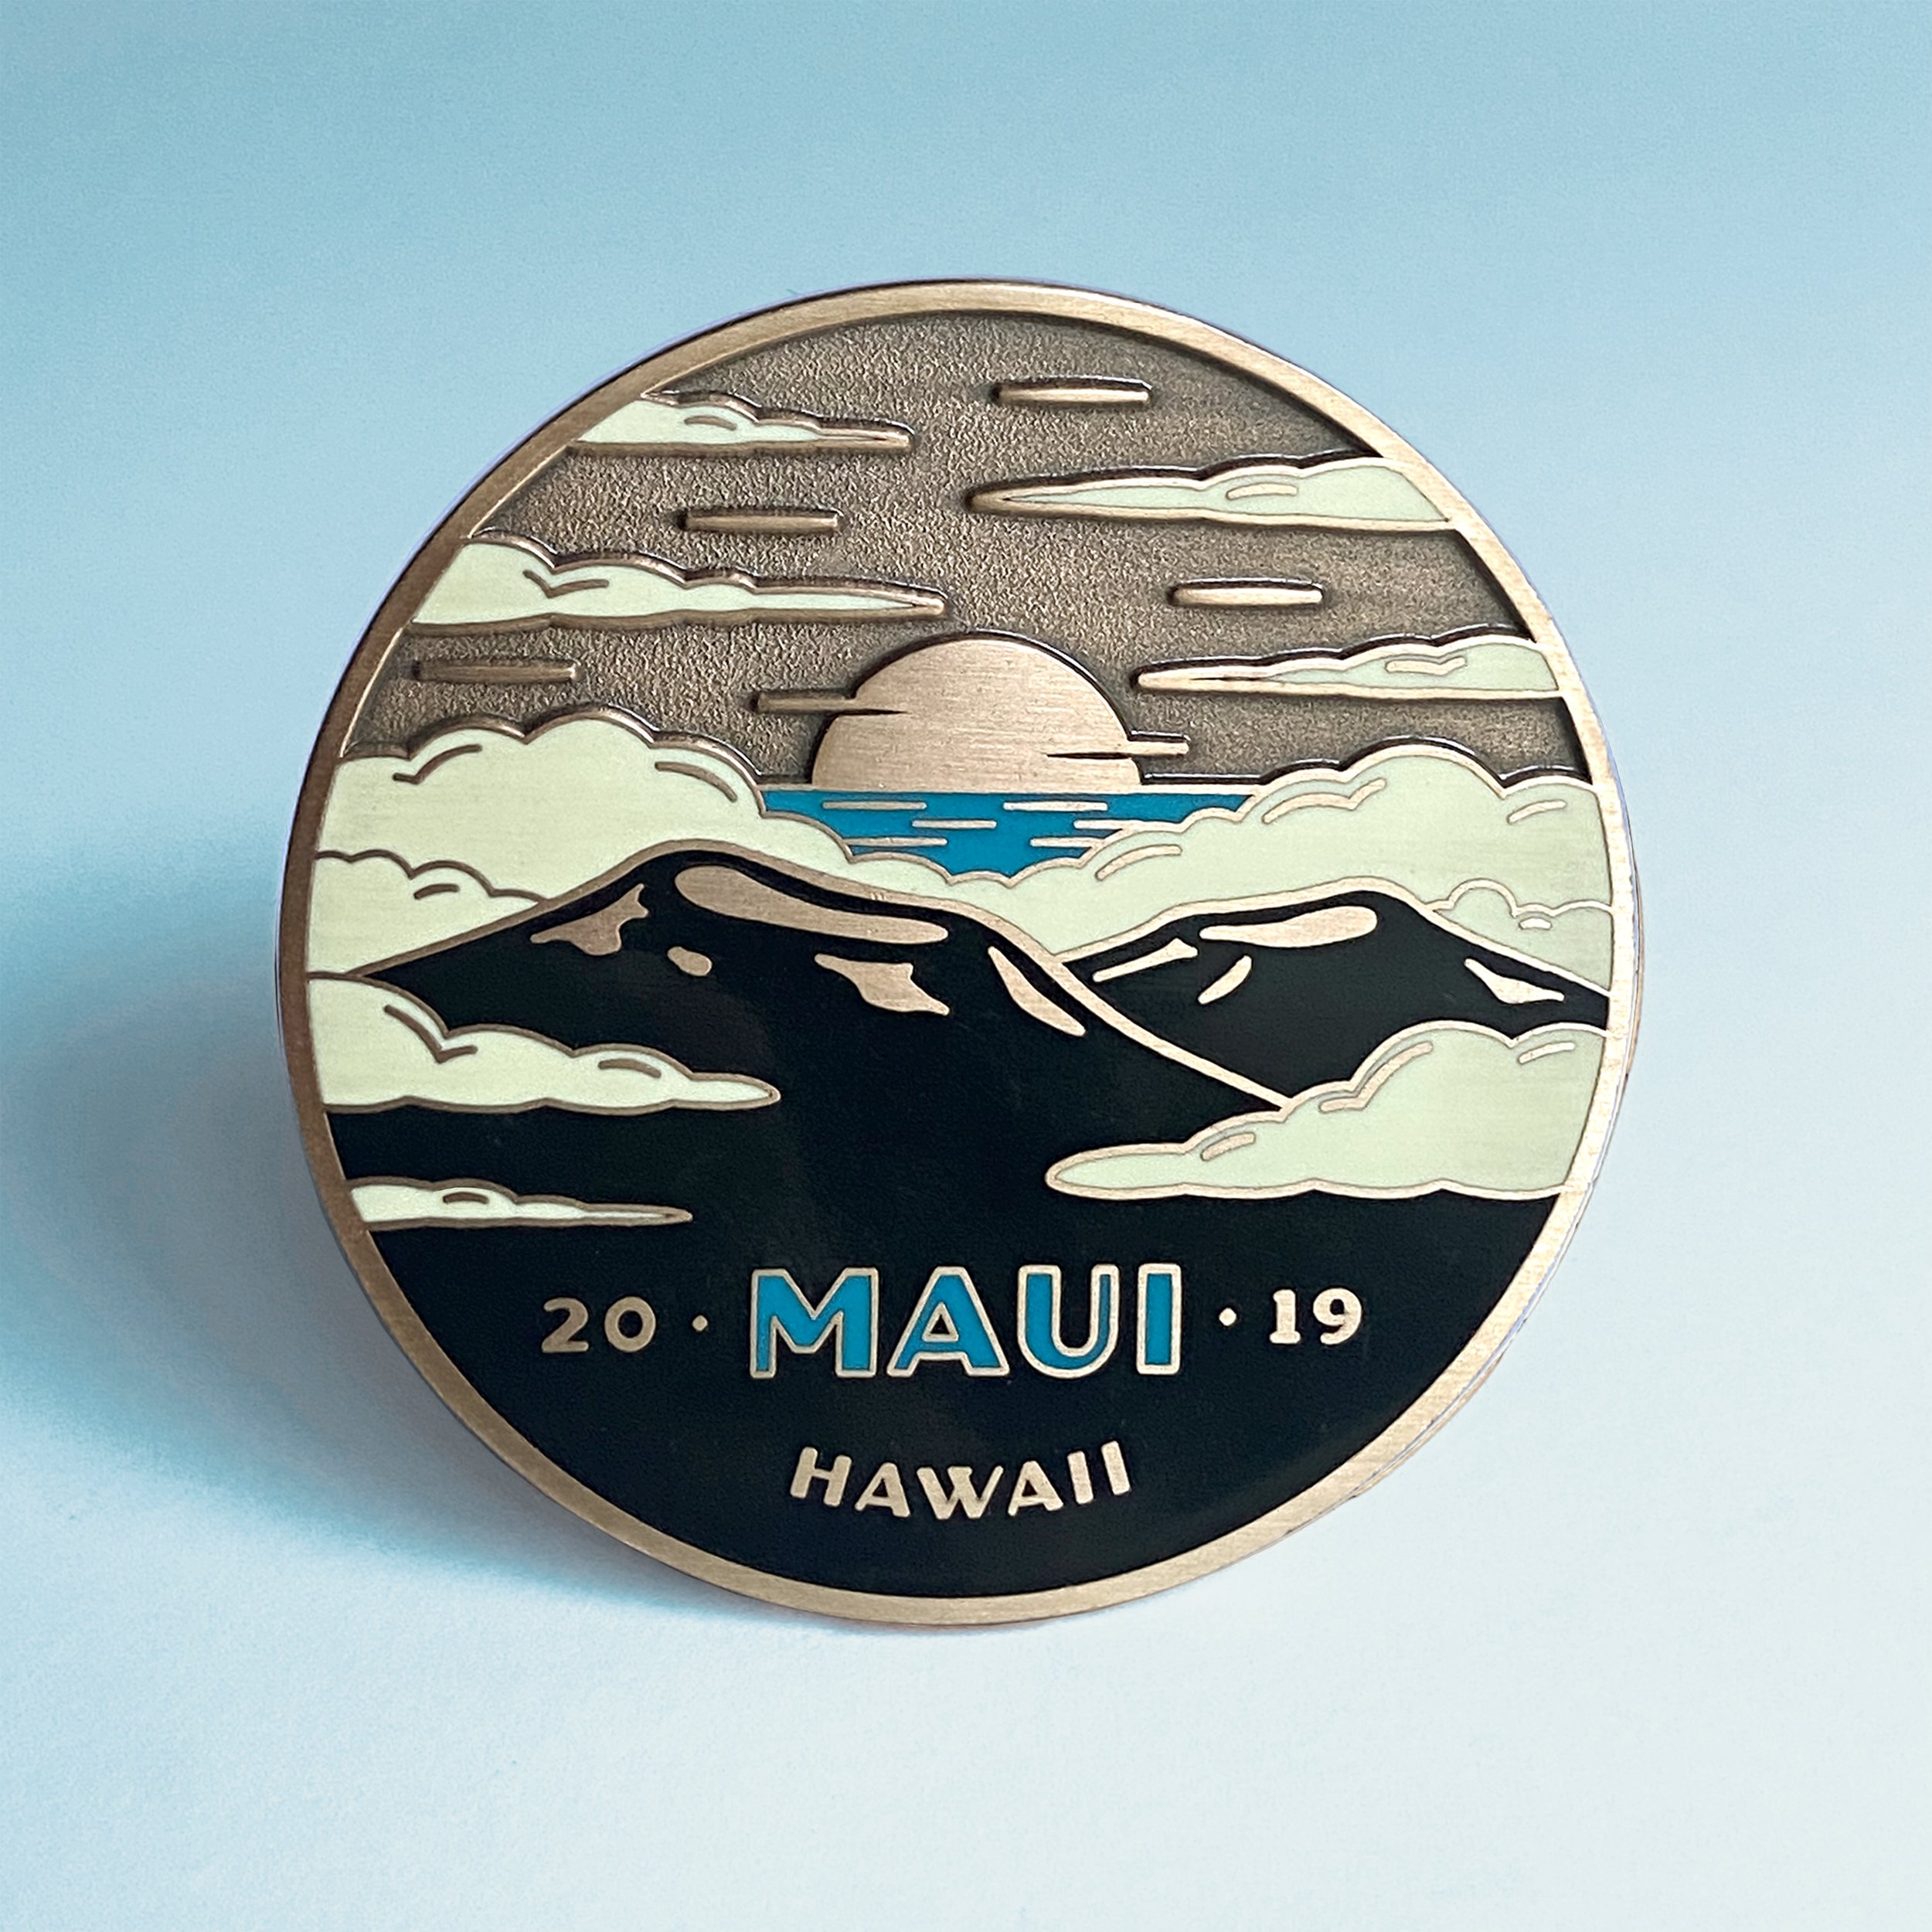 3 Maui Coins.jpg